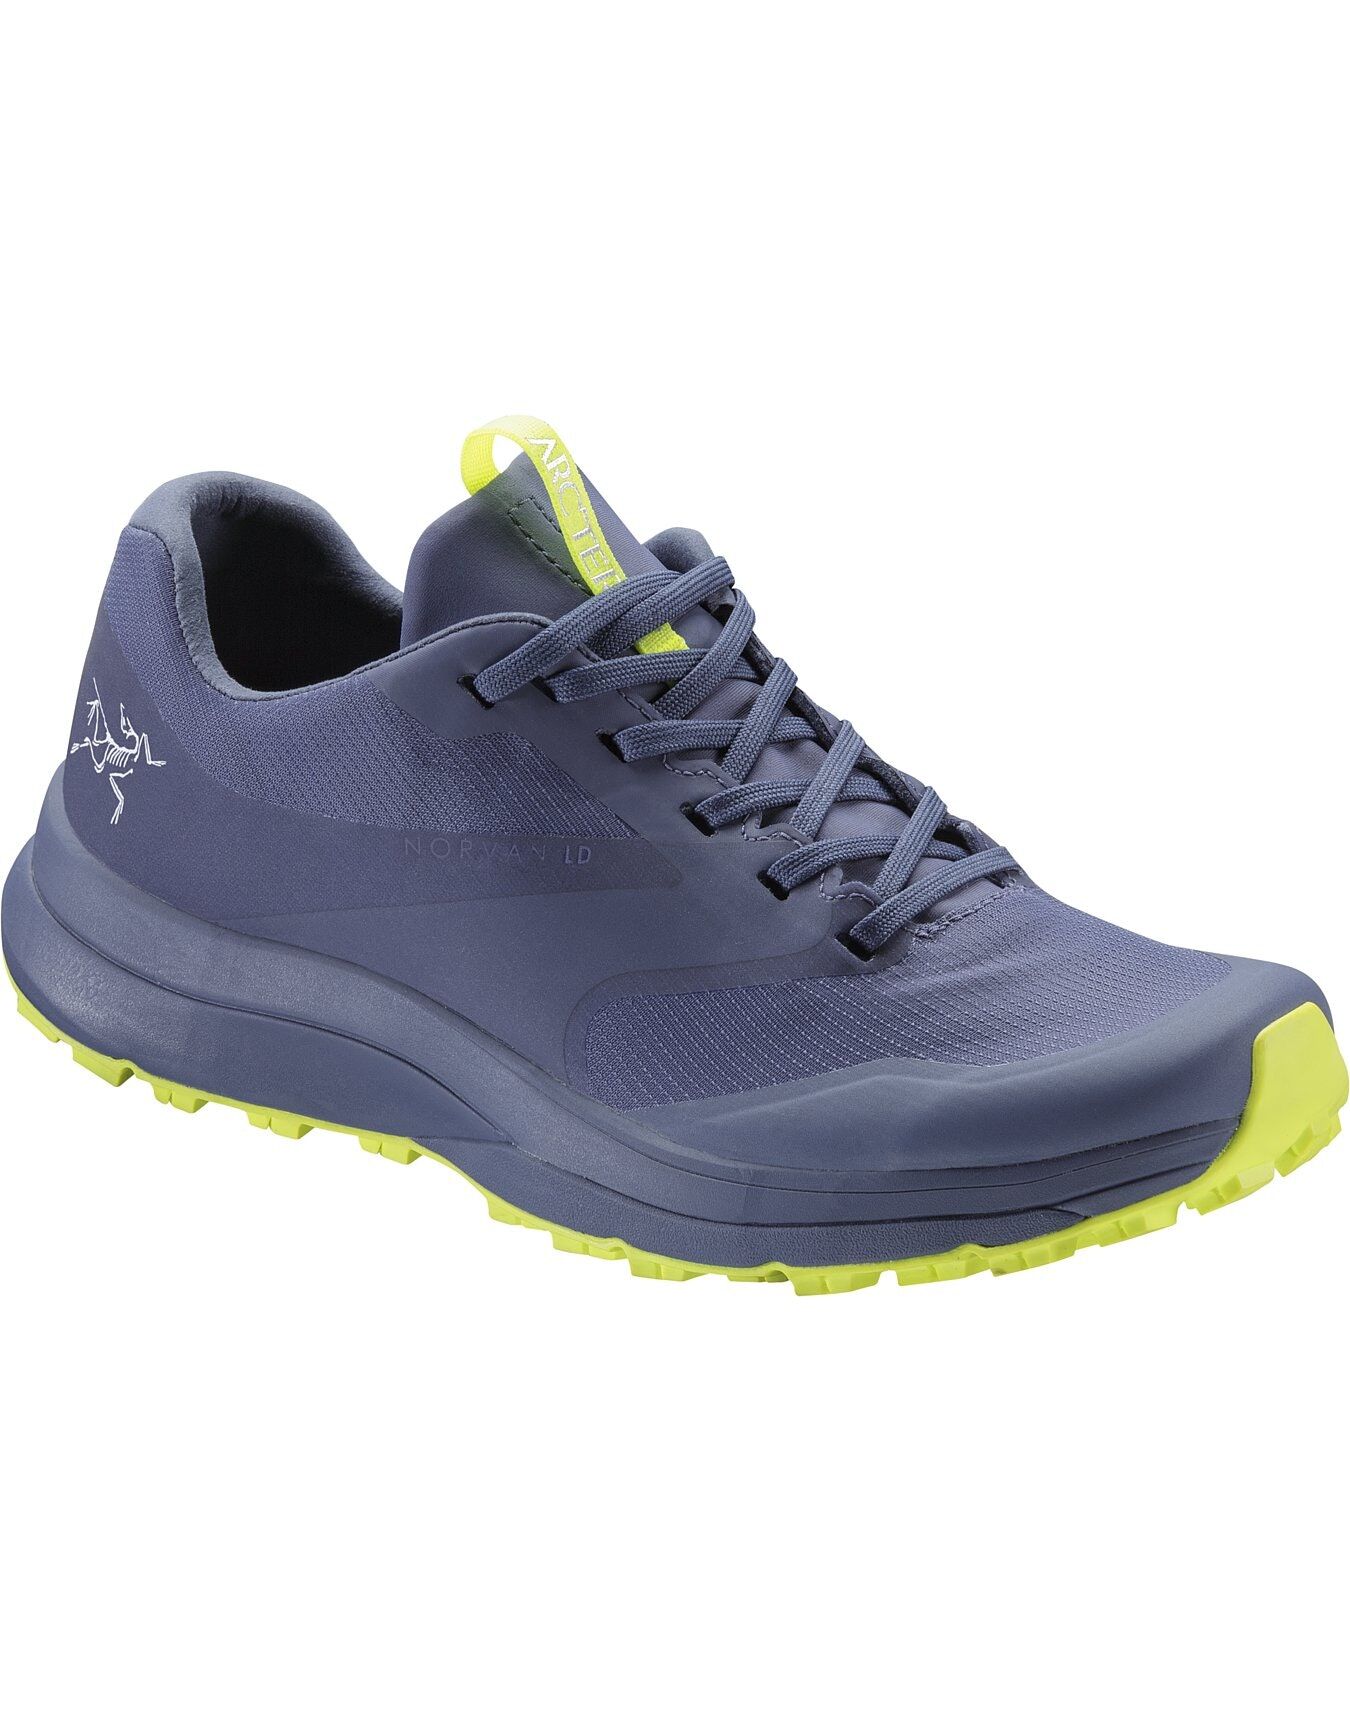 Arc'teryx Norvan LD - Trail running shoes - Women's